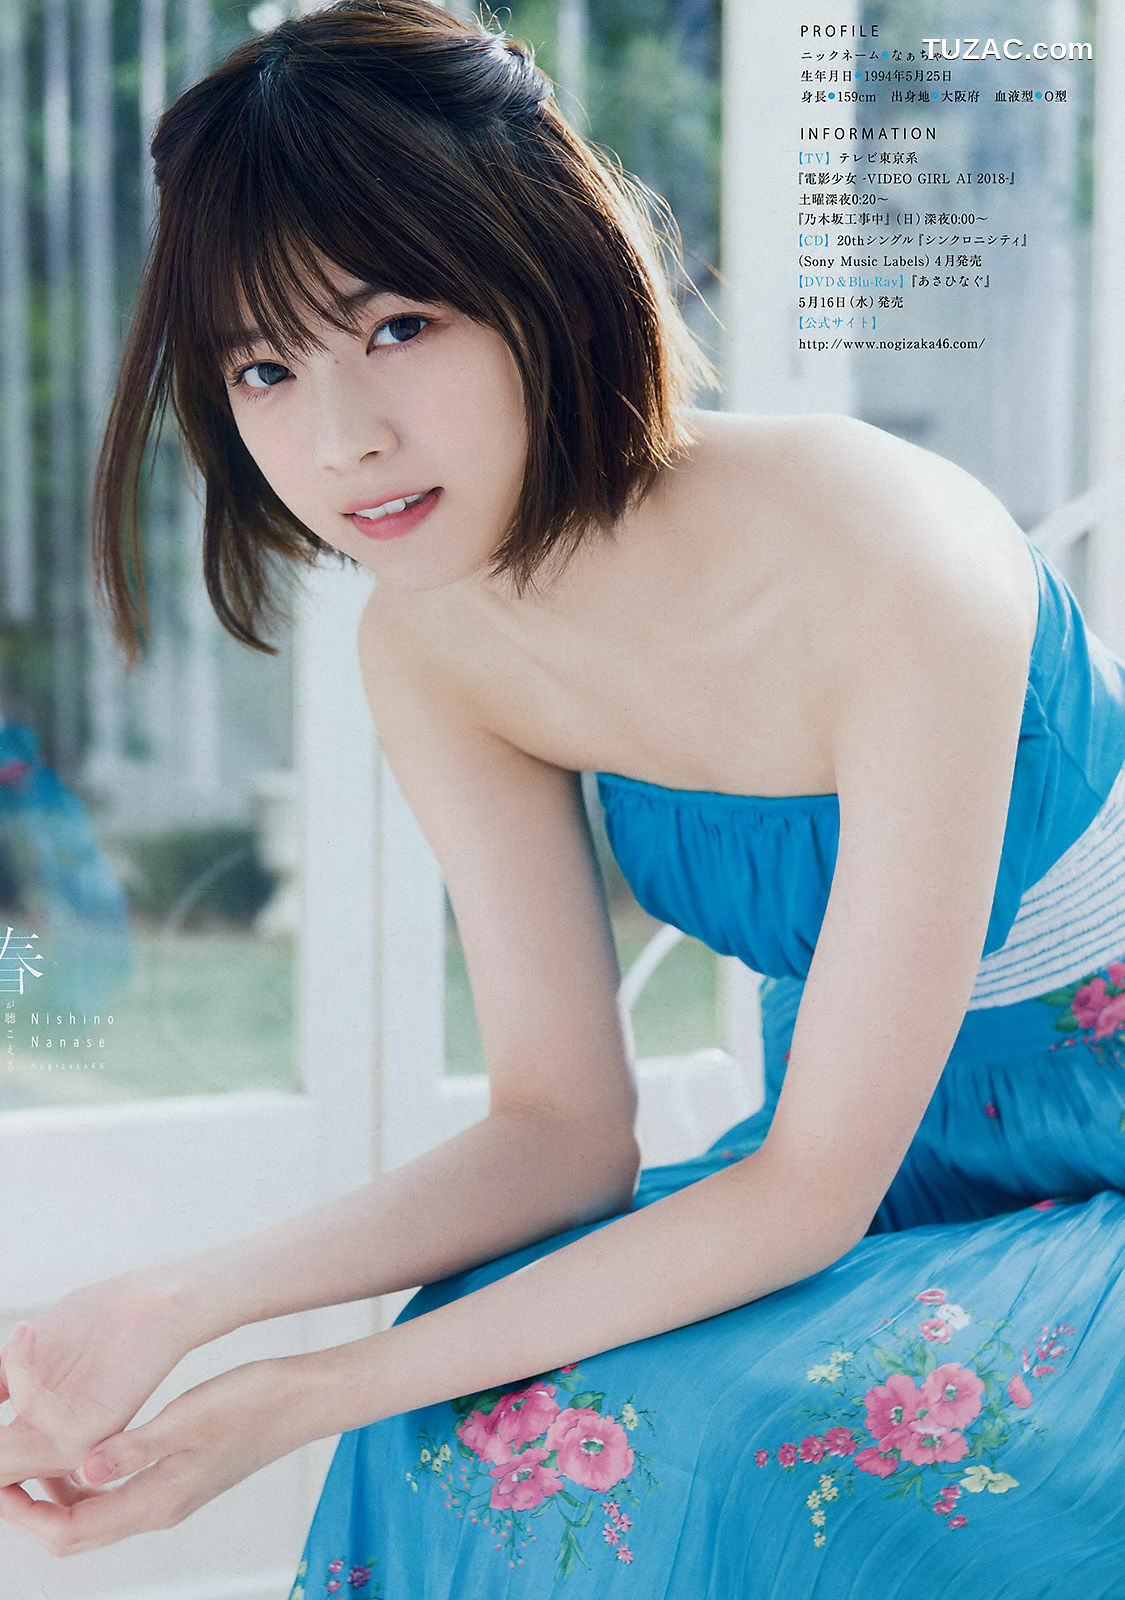 Young Magazine杂志写真_ 西野七瀬 Nanase Nishino 2018年No.14 写真杂志[11P]